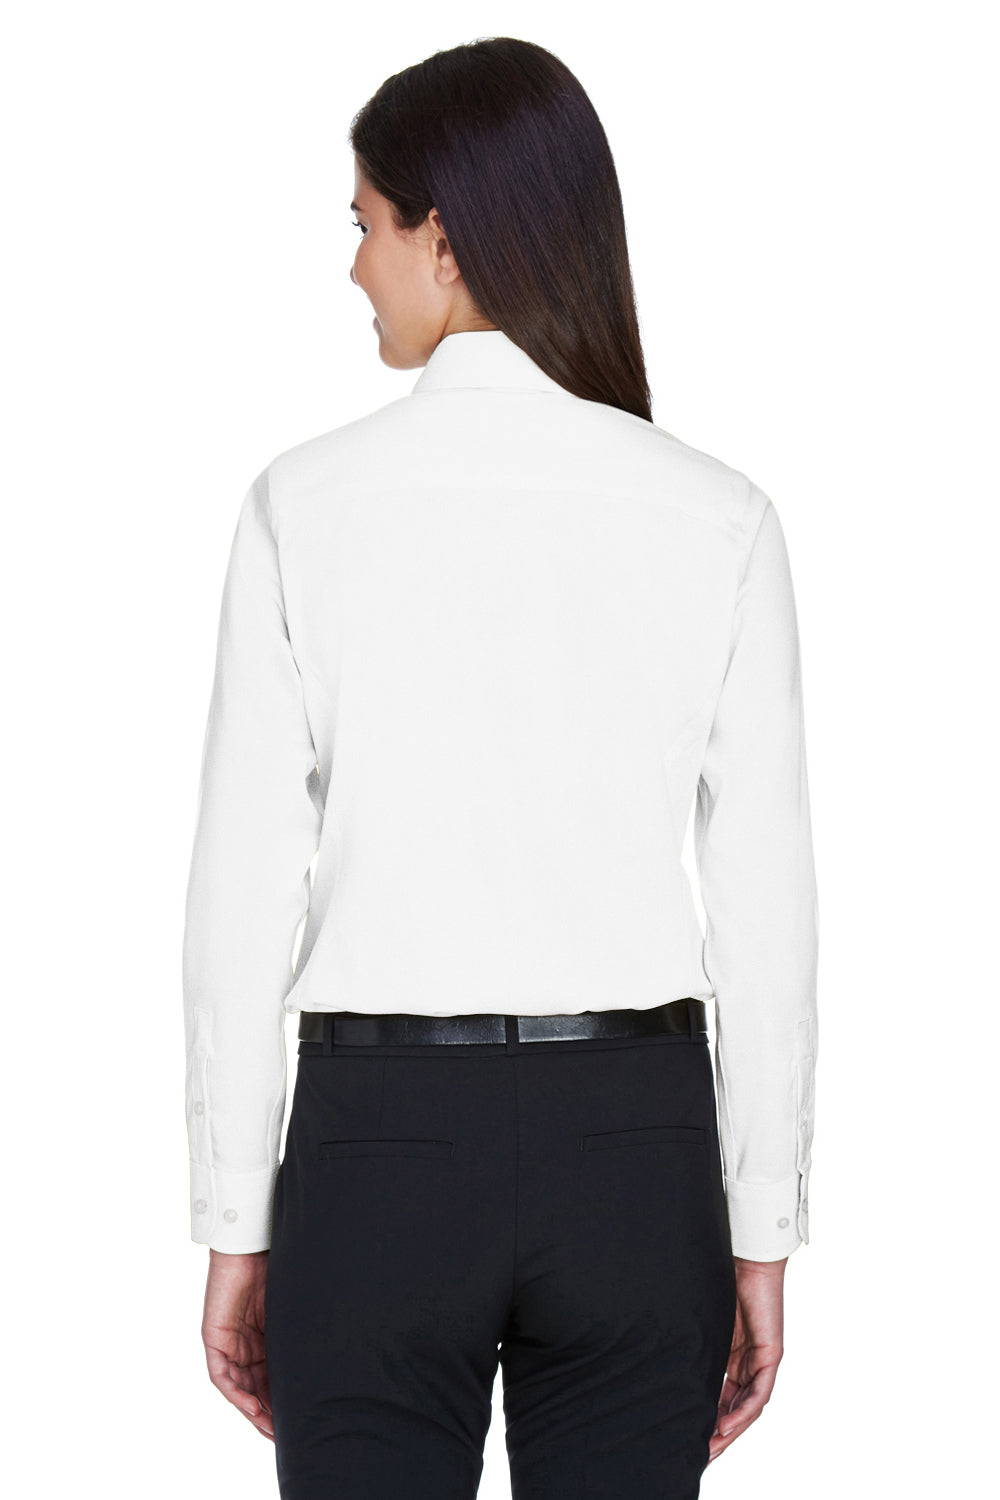 Devon & Jones DG530W Womens Crown Woven Collection Wrinkle Resistant Long Sleeve Button Down Shirt w/ Pocket White Back